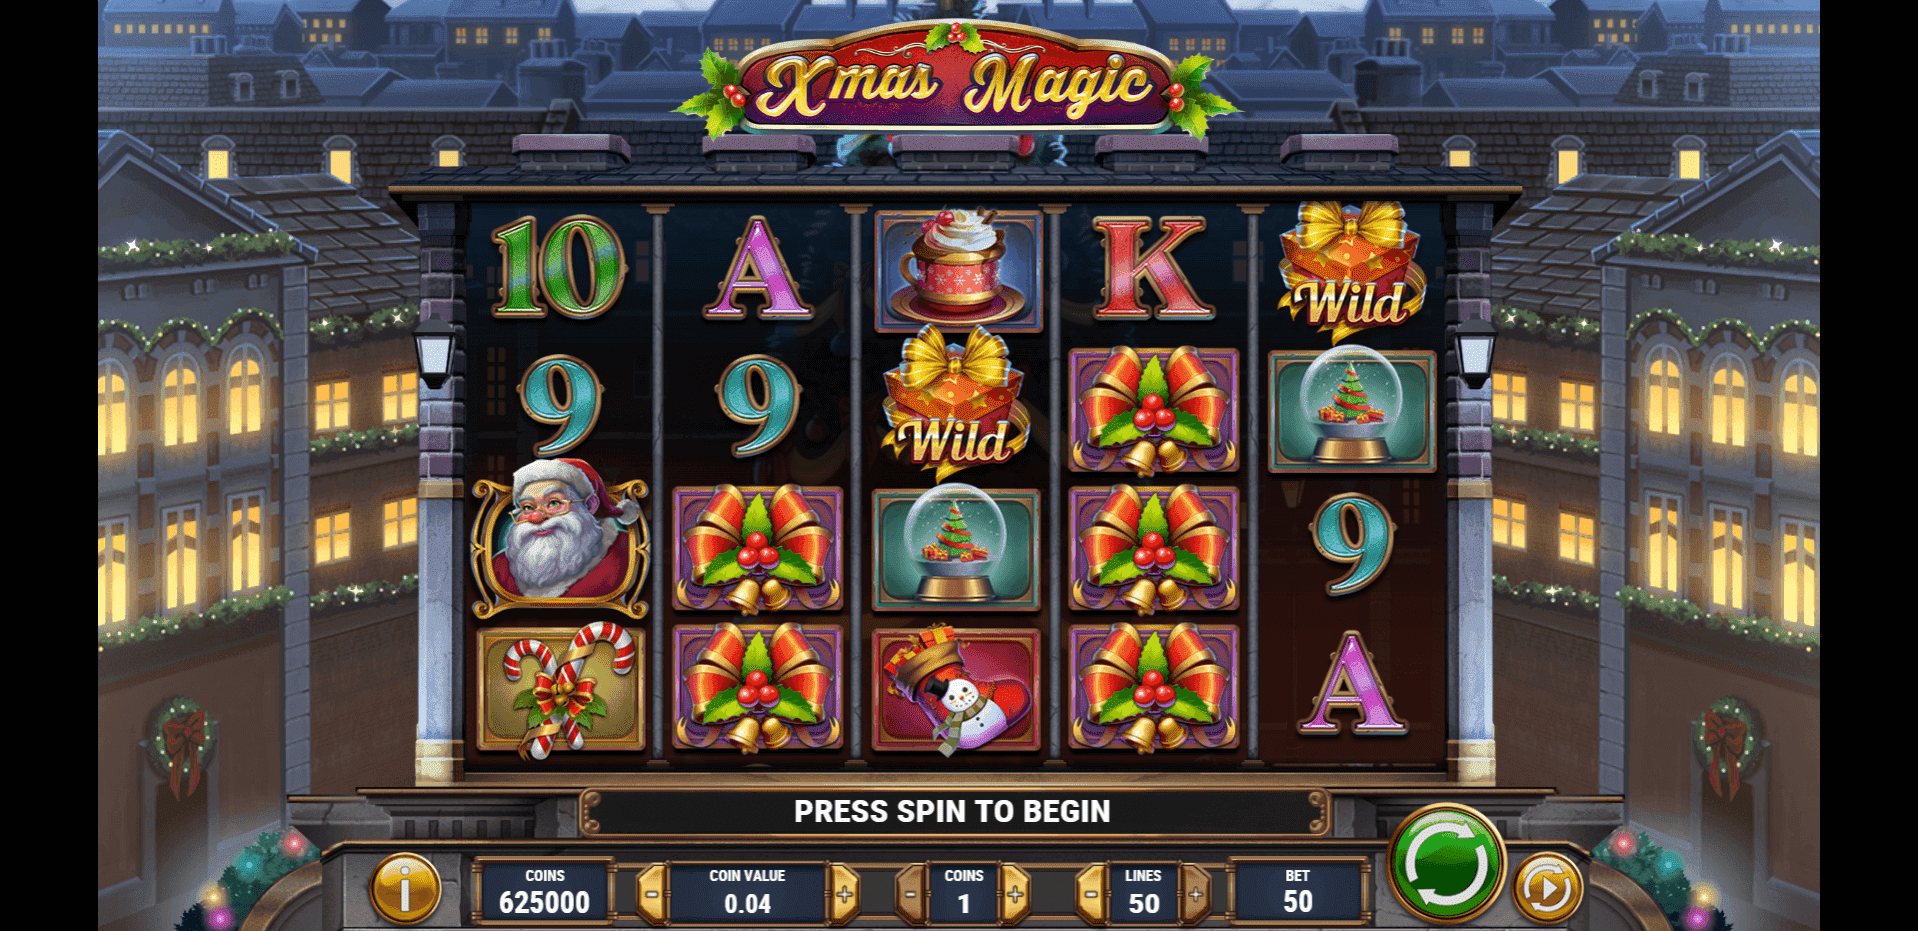 Xmas Magic slot play free